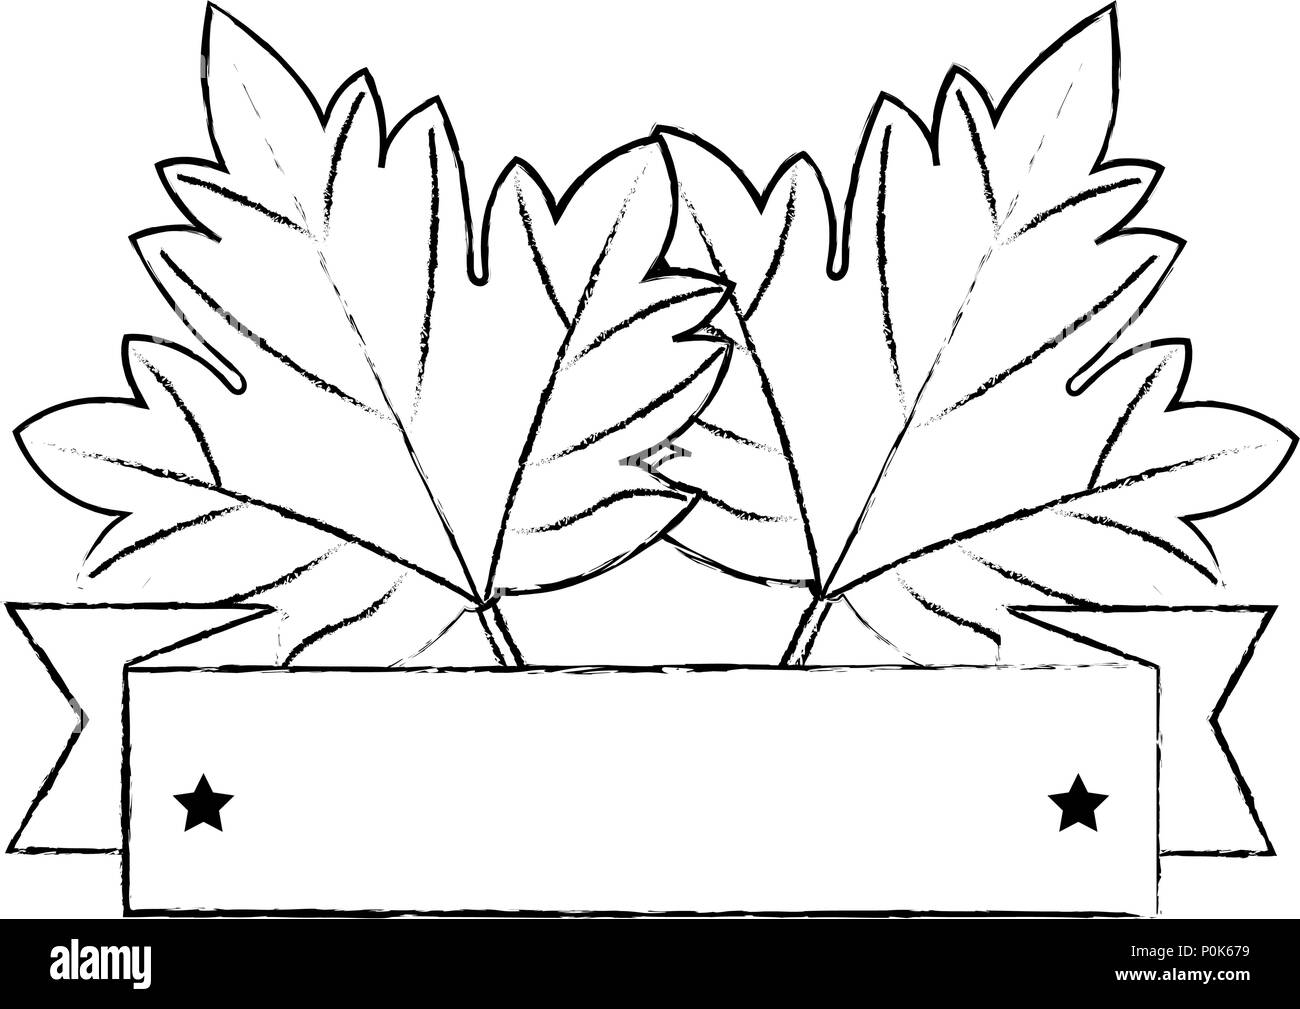 maple leaf emblem icon Stock Vector